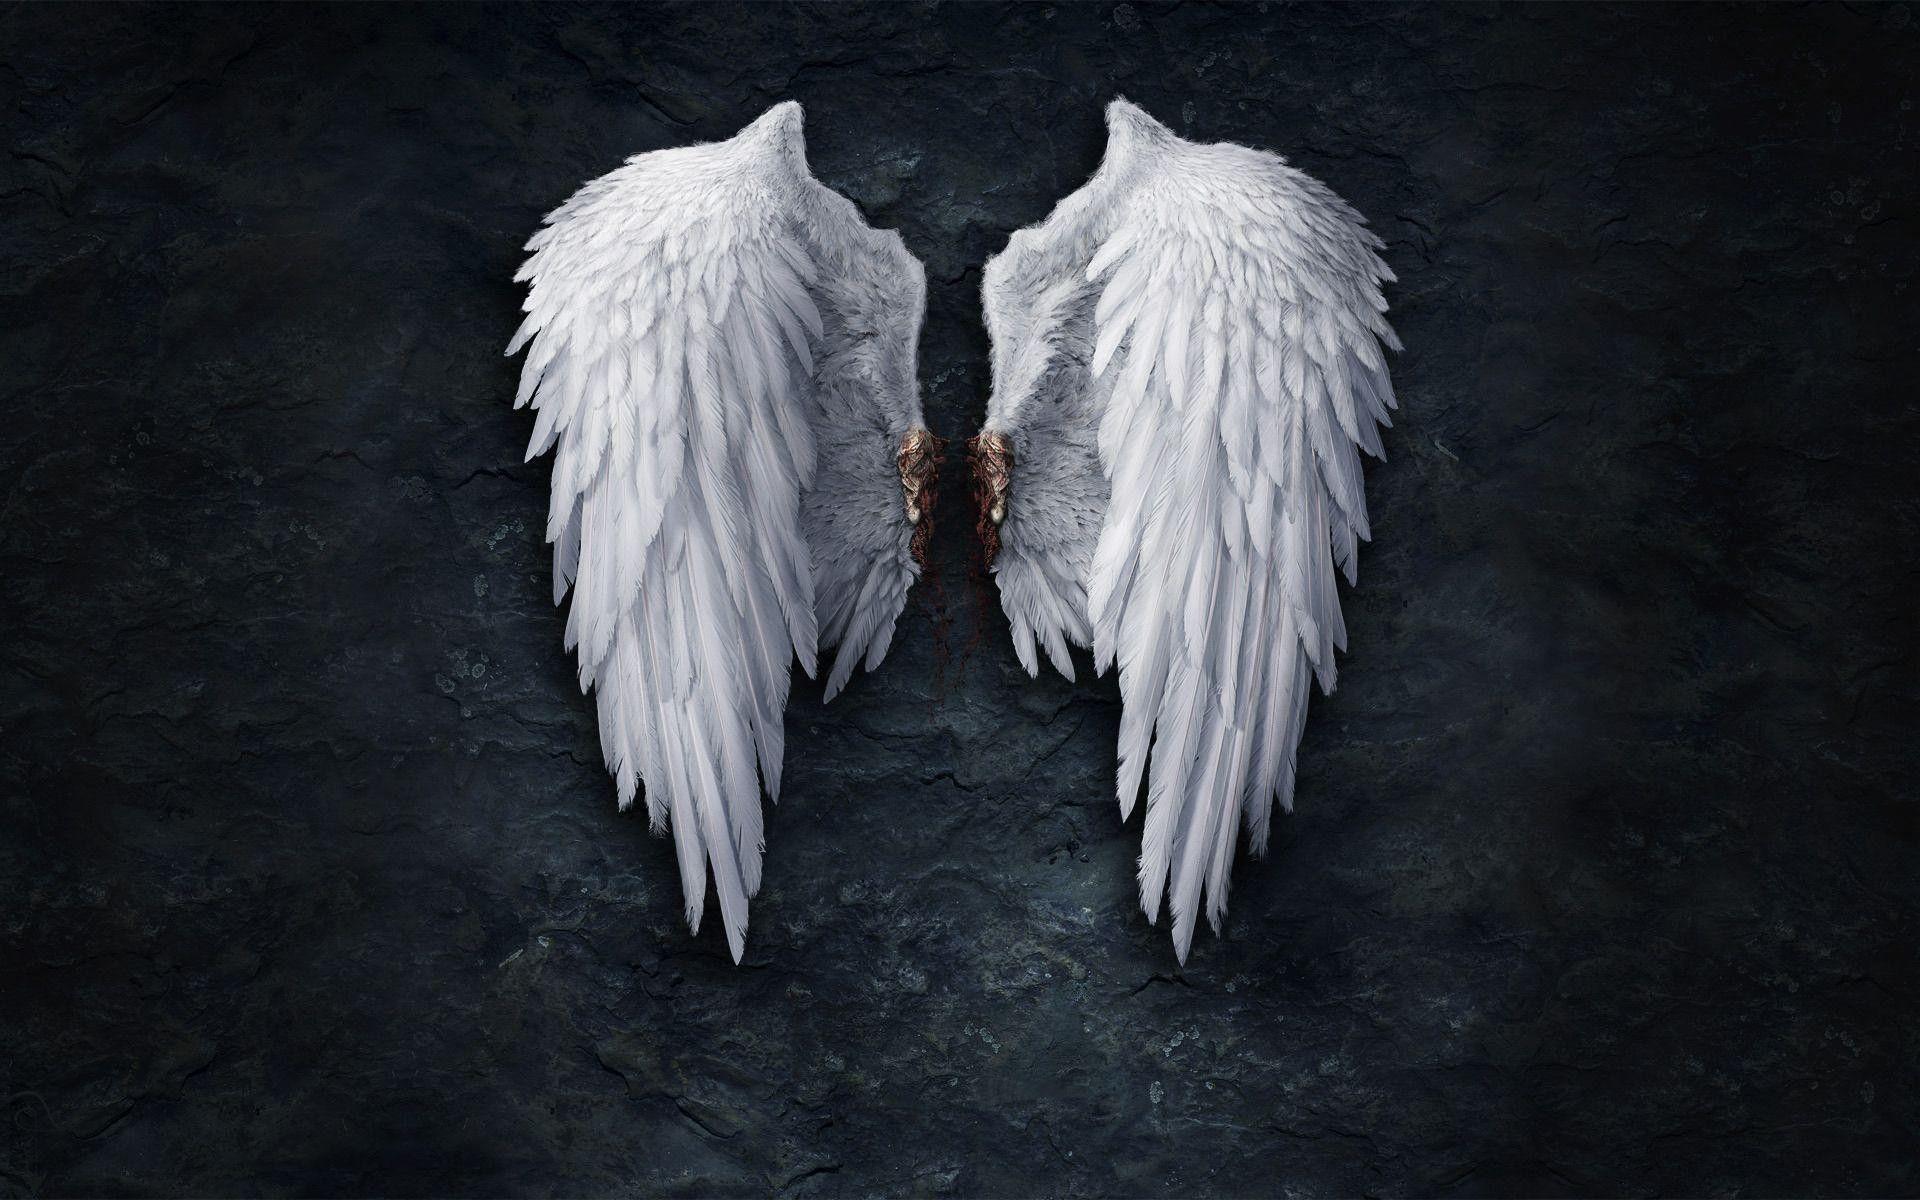 Download wallpaper 1280x2120 black wings demon angel artwork fantasy  iphone 6 plus 1280x2120 hd background 26004